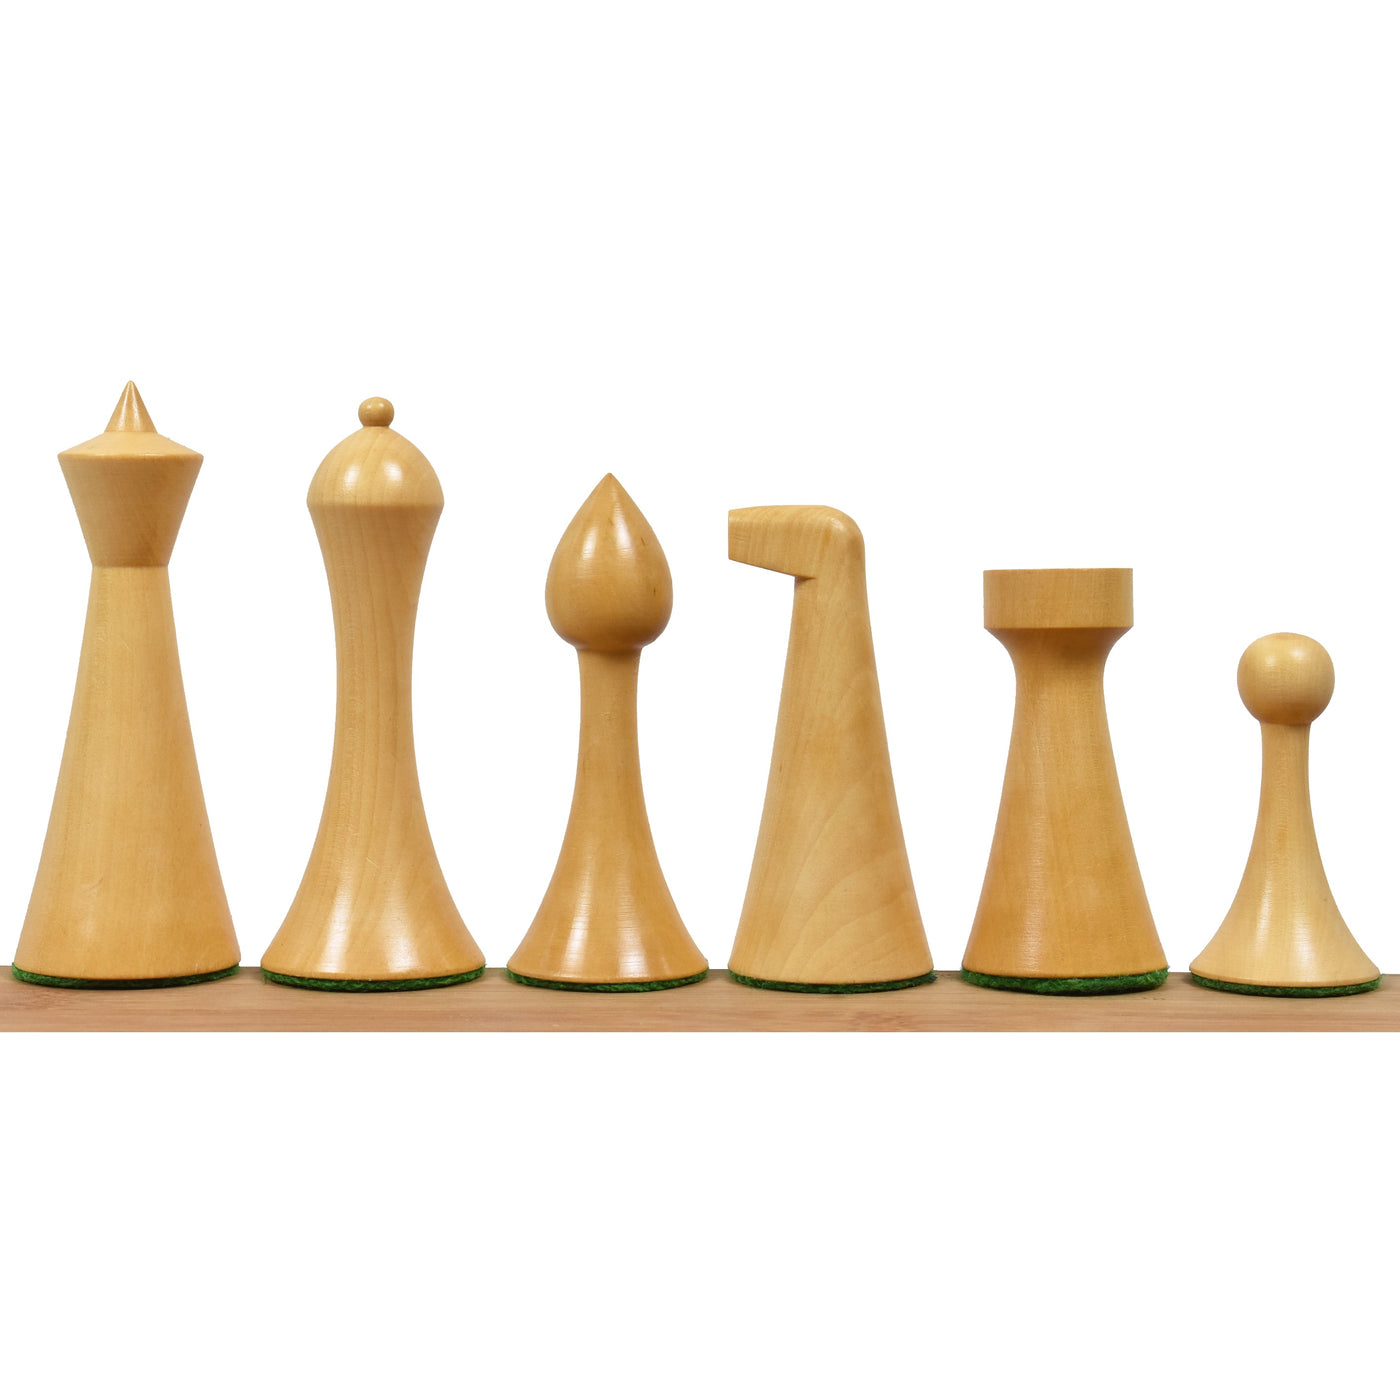 Herman Ohme Minimalist Combo Chess Set- Chess Piece & Board-Golden Rosewood